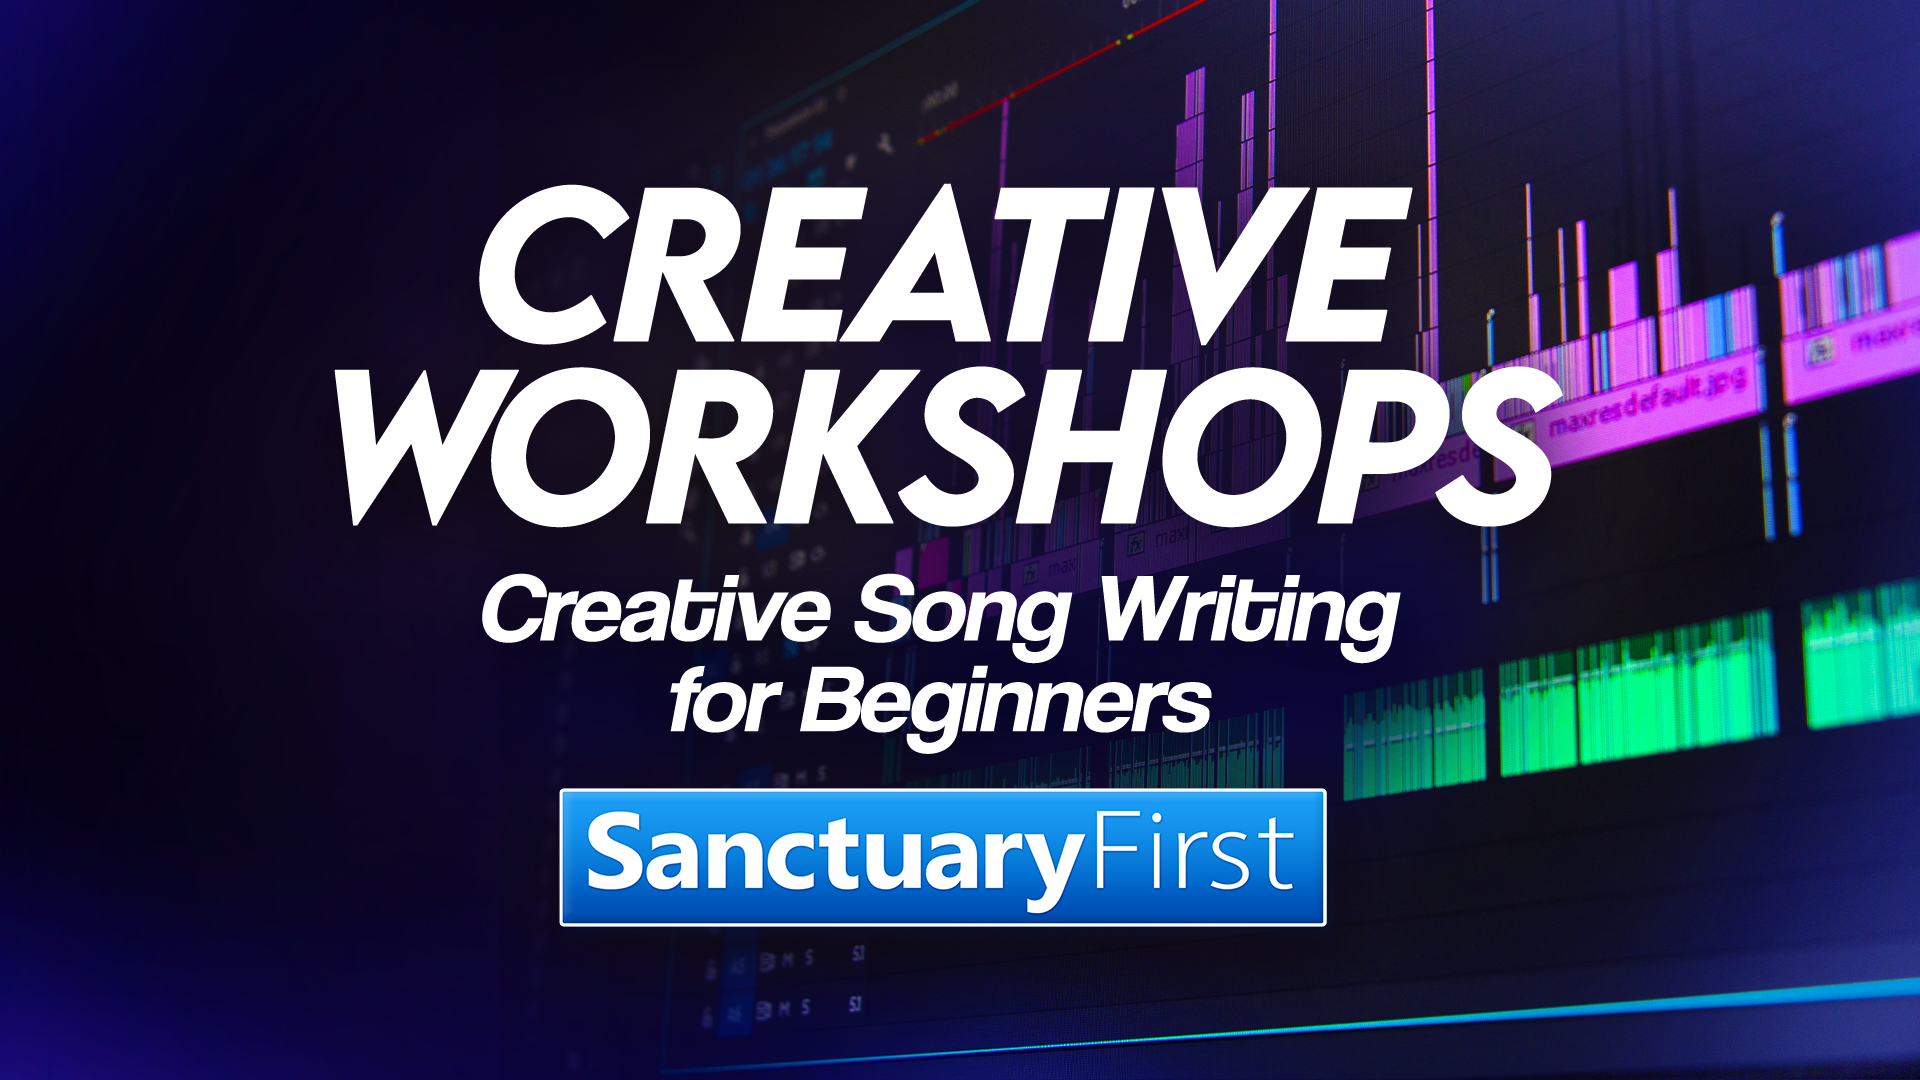 Creative Workshops - Creative Song Writing for Beginners